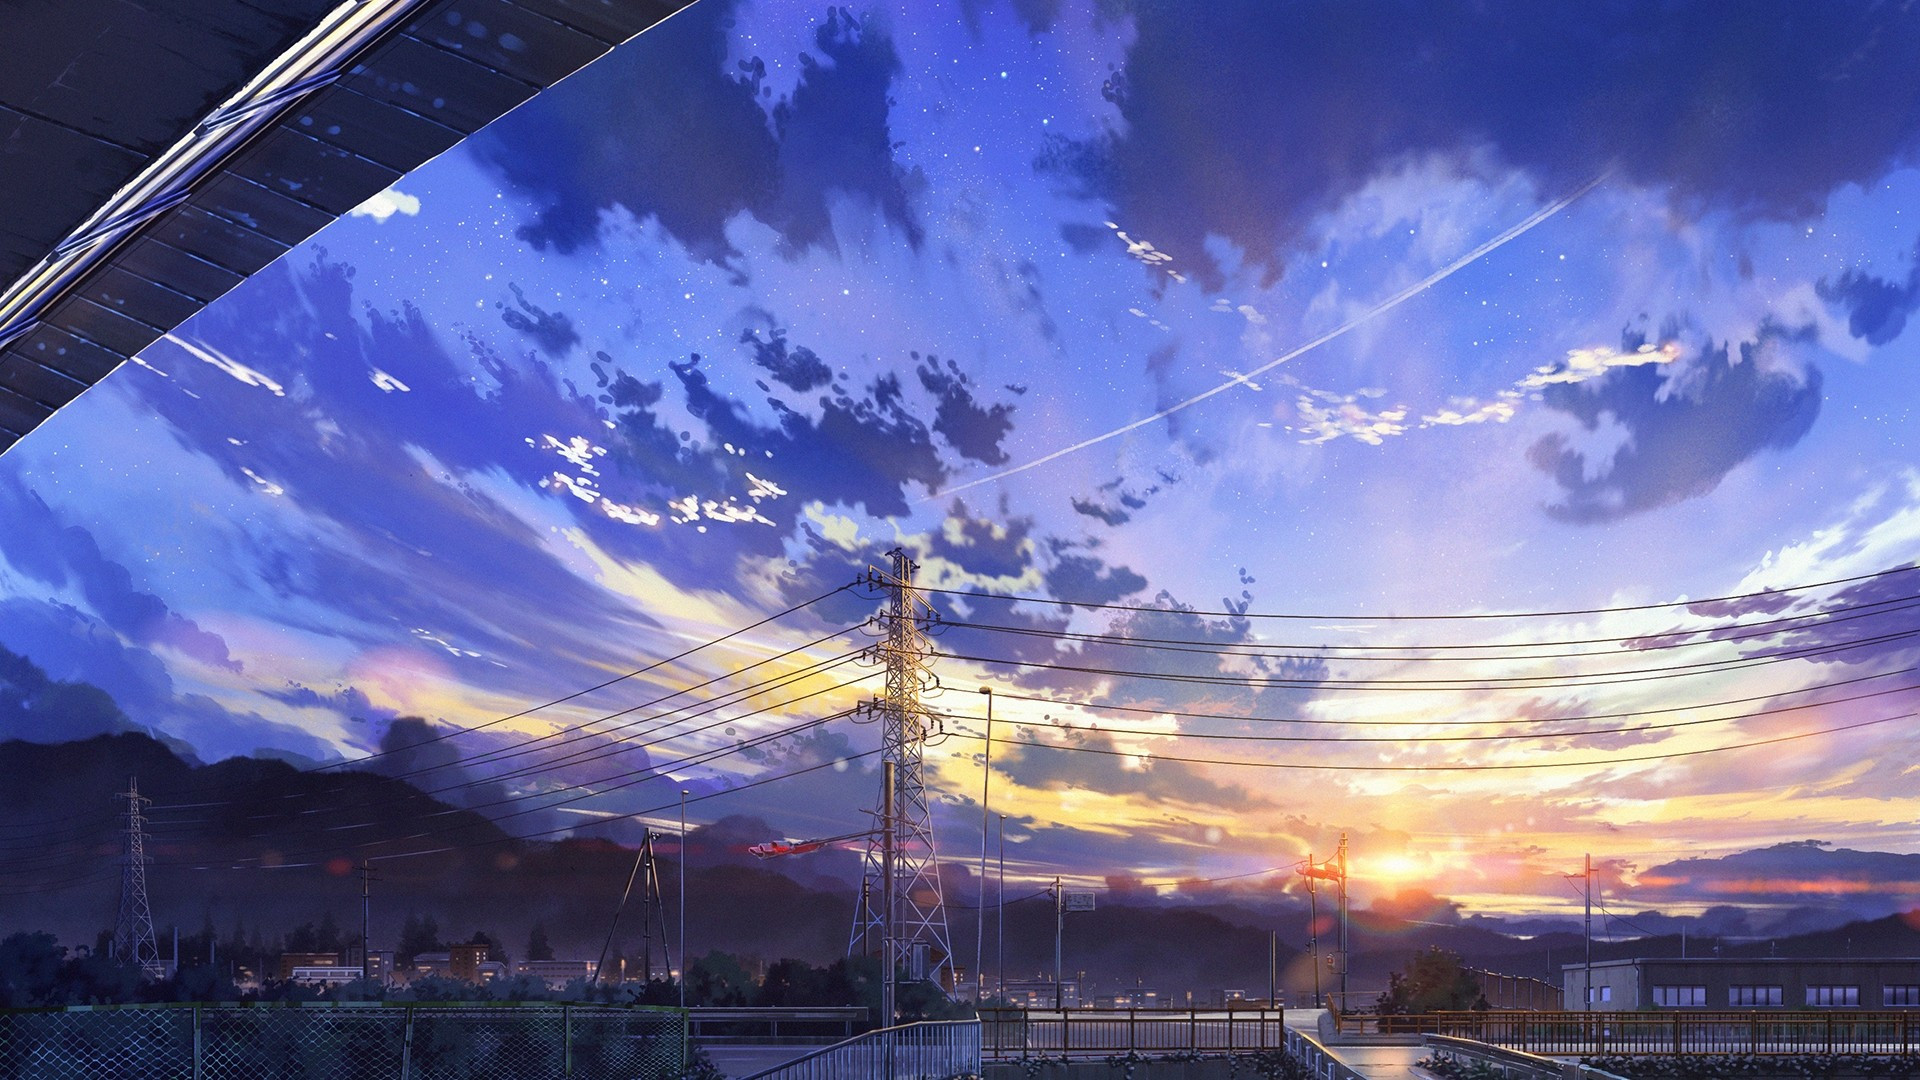 30+] Anime Landscapes 1920x1080 Wallpapers - WallpaperSafari